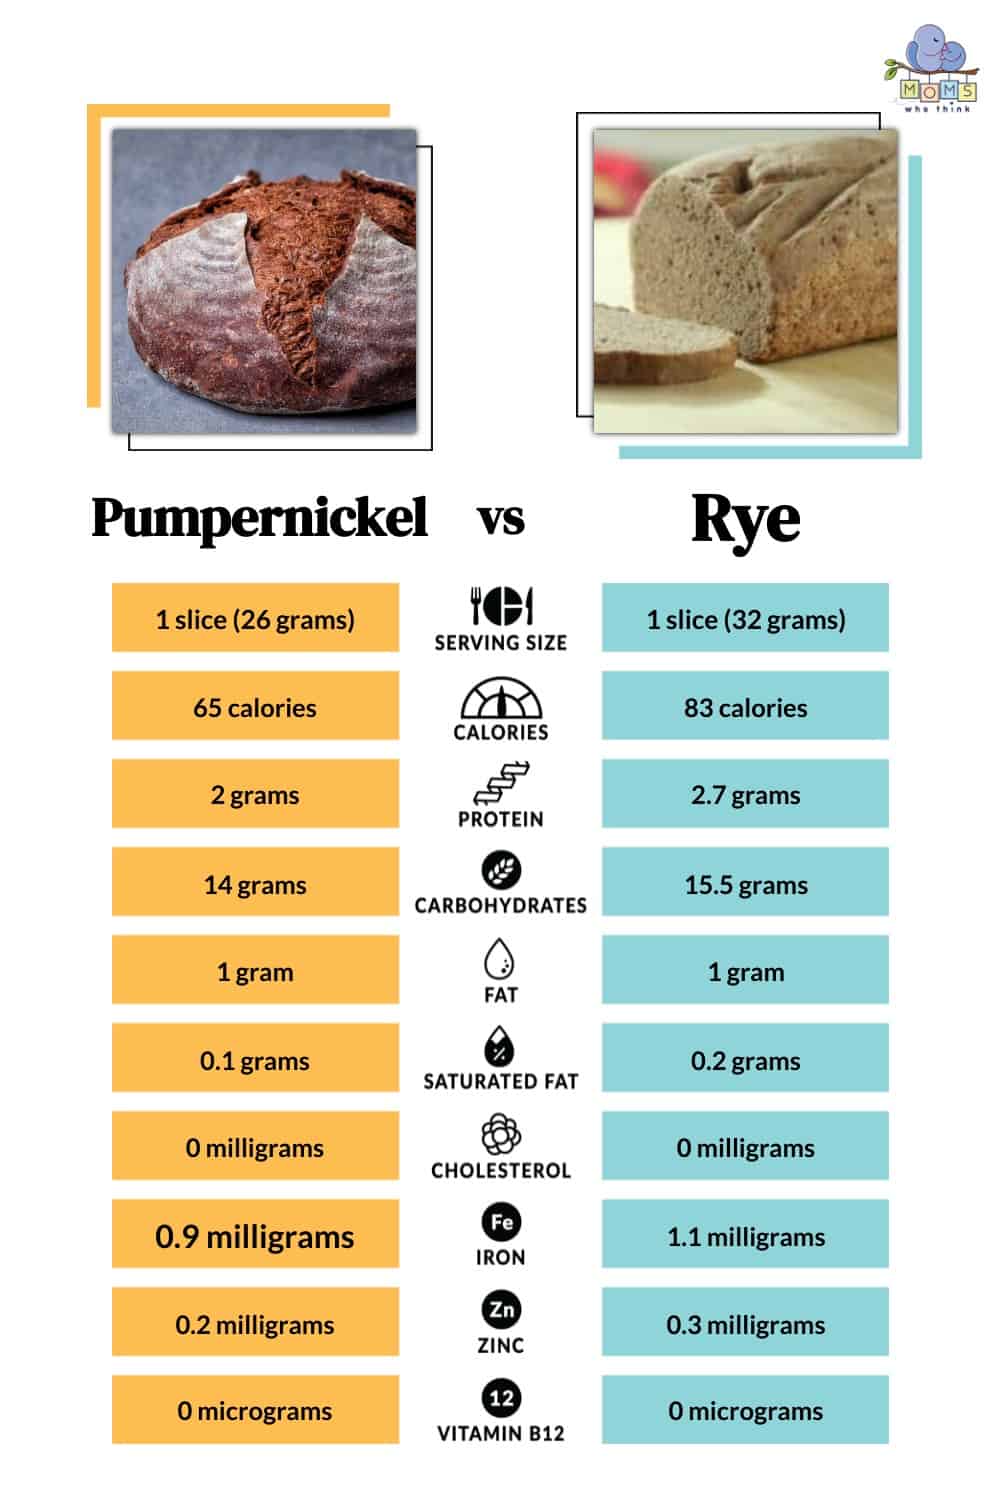 Pumpernickel vs Rye Nutritional Facts